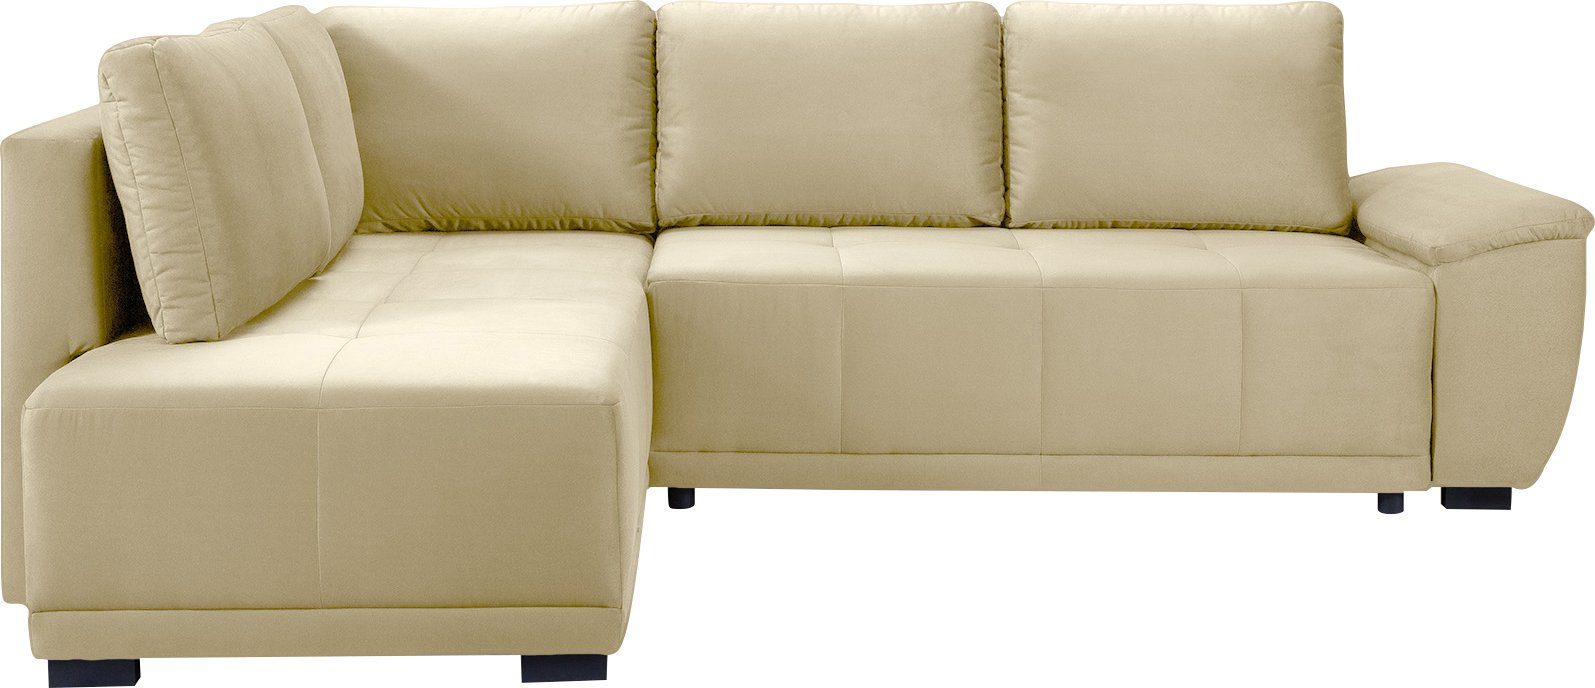 Schlaffunktion - Bettkasten, Rückenkissen & sofa inkl. beidseitig, mane Ecksofa, 5 fashion exxpo